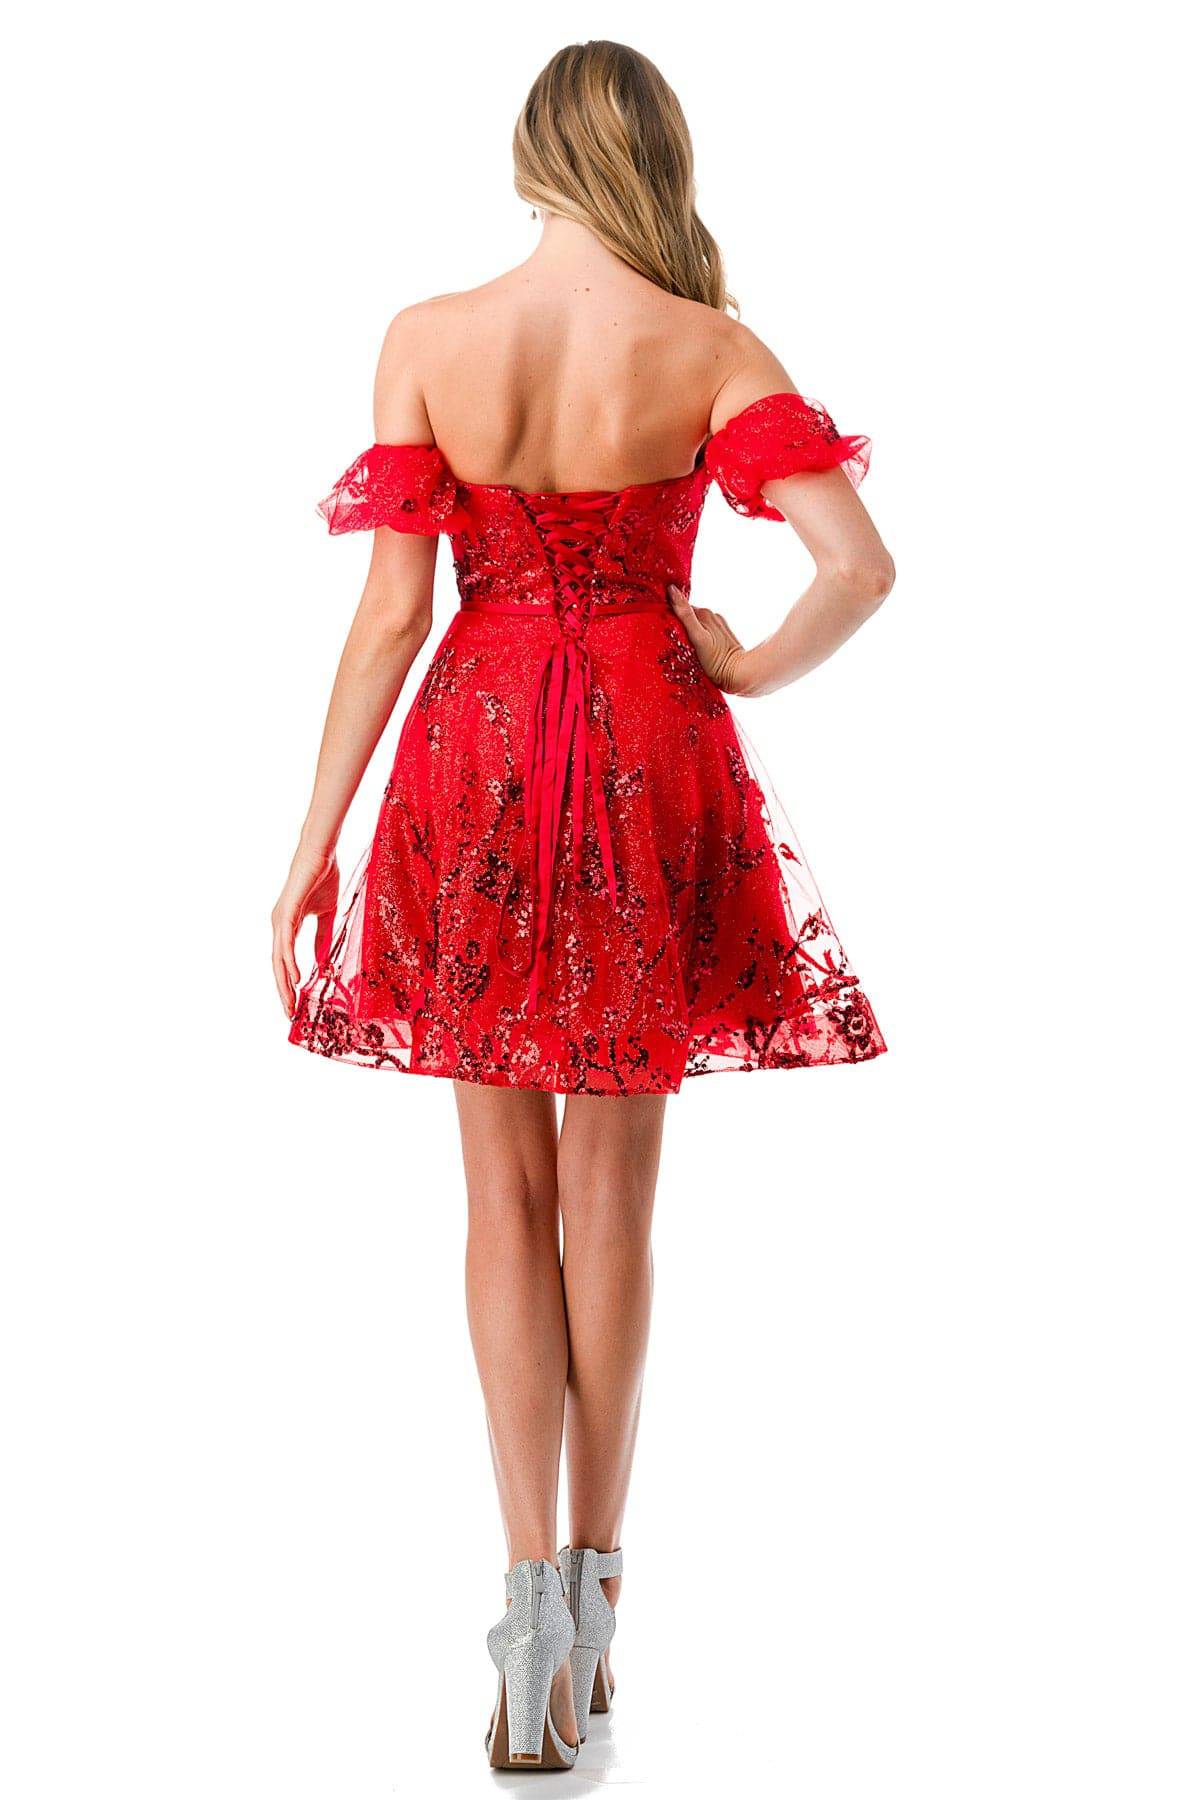 Aspeed S2747B Sparkling Red Off Shoulder Short Dress - NORMA REED